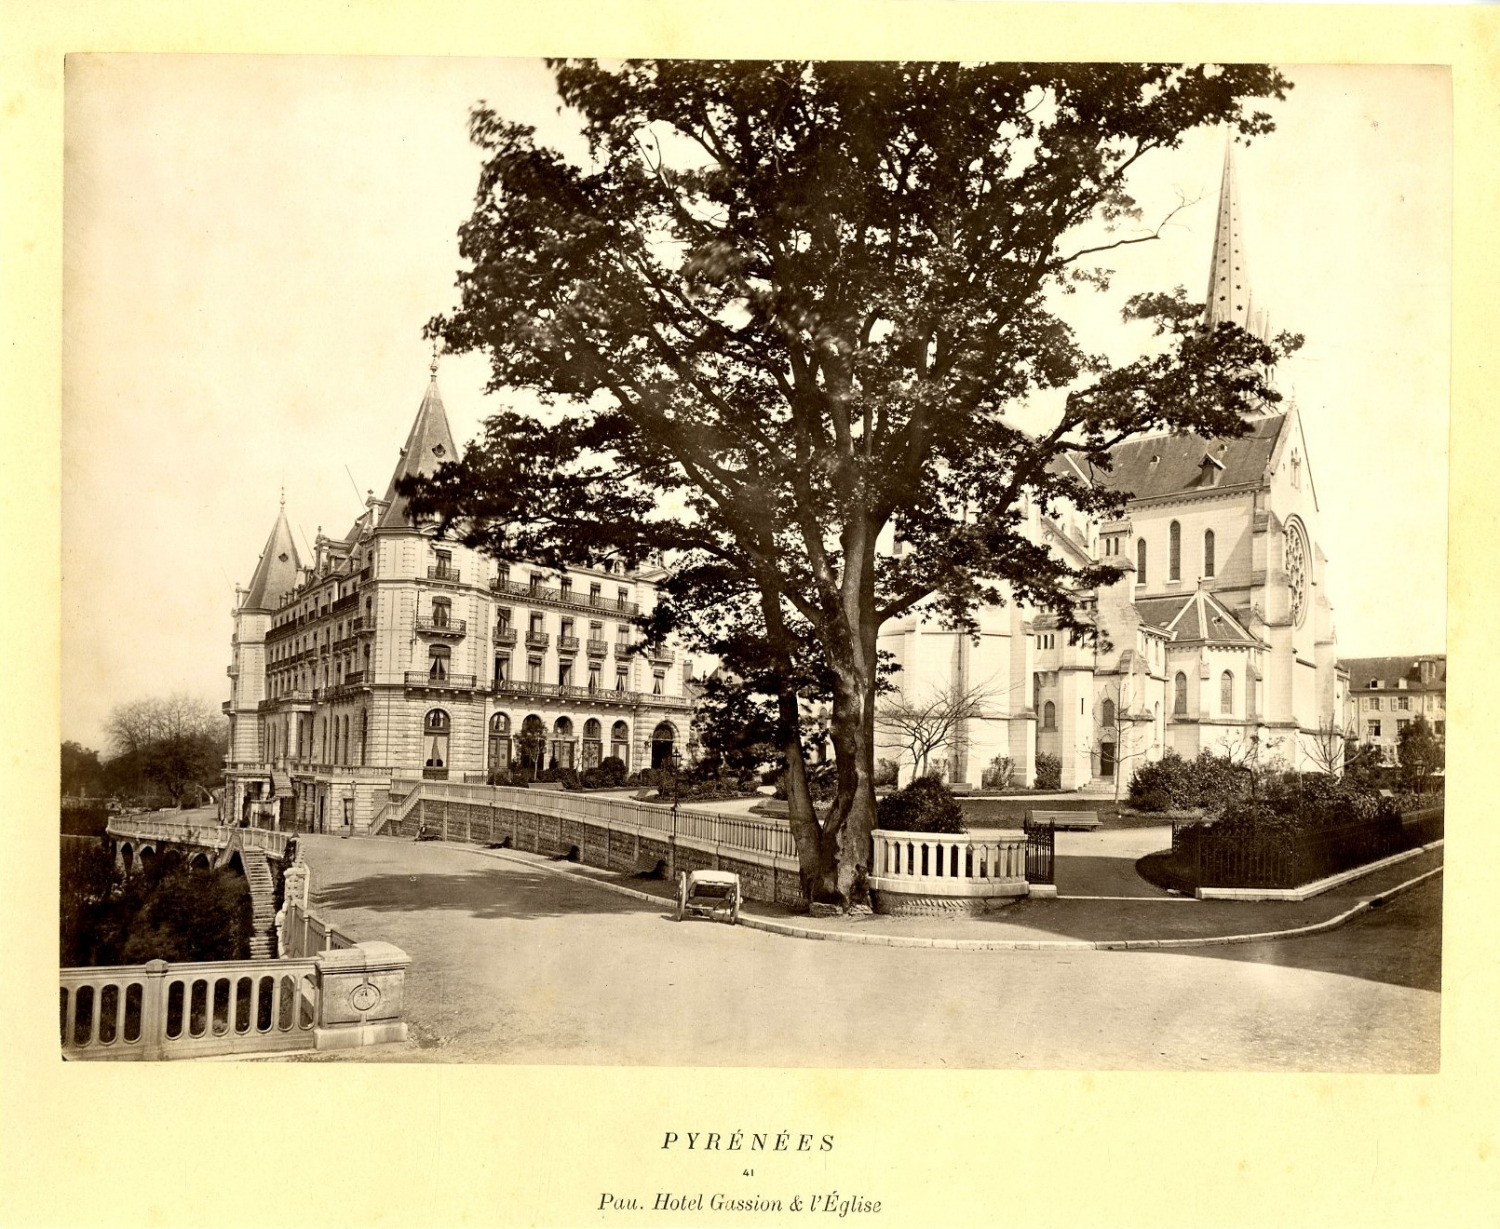 France, Pyrenees, Pau, Hotel Gaisson & Eglise France. Vintage Albumen Print. 